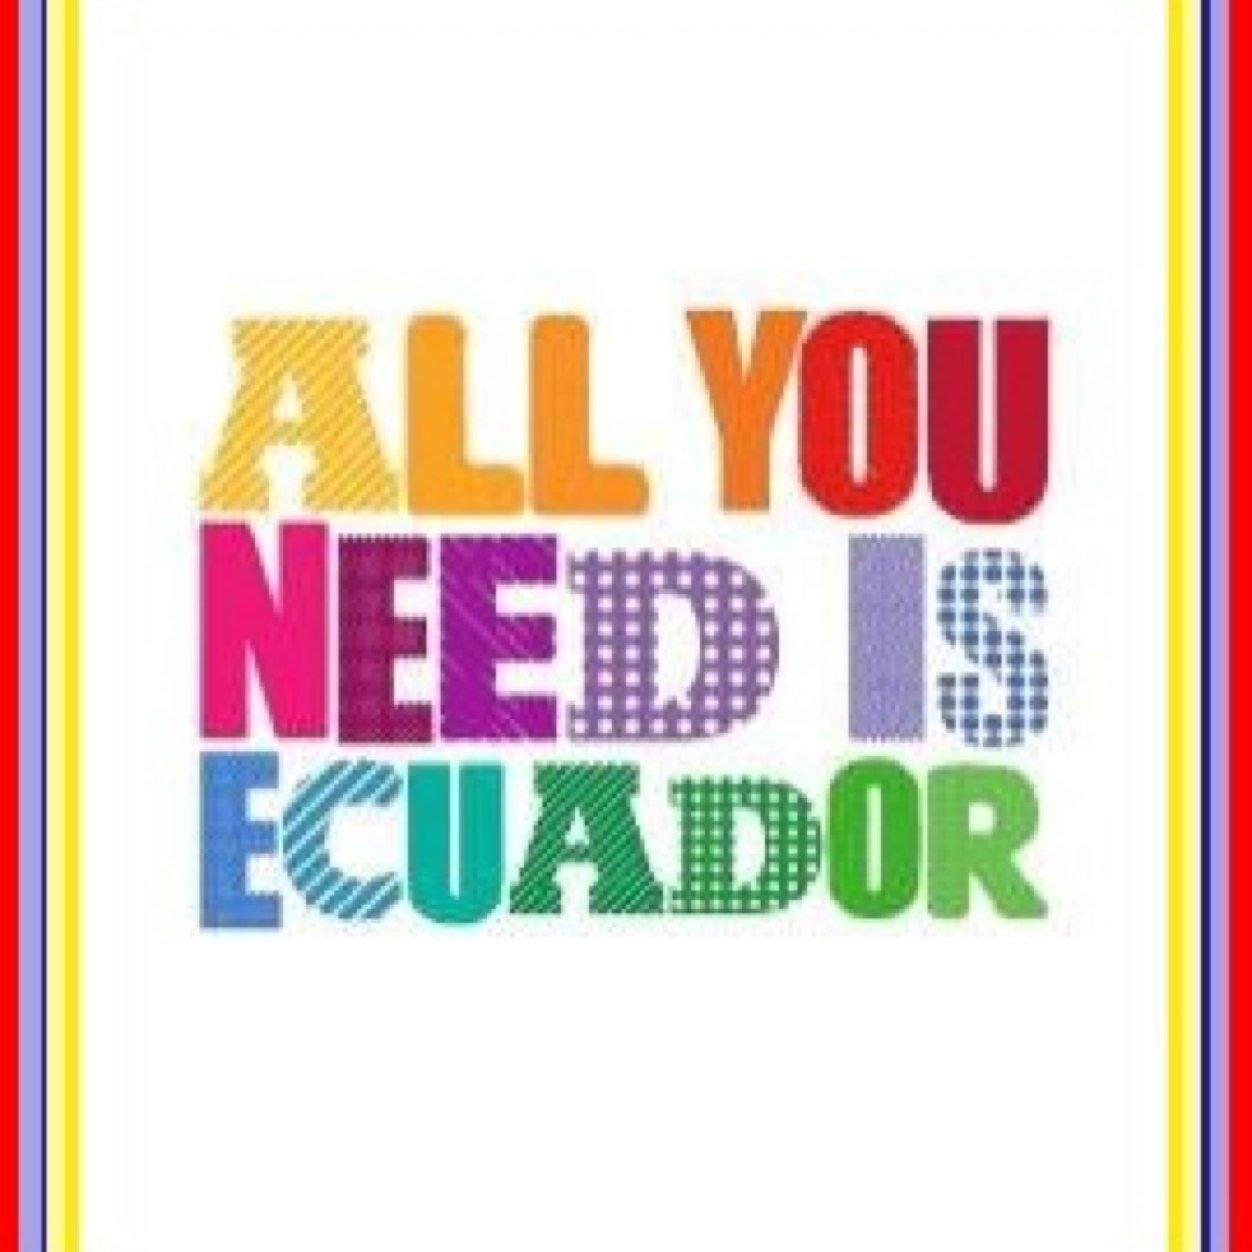 Ecuador Potencia Turistica #AllYouNeedisEcuador http://t.co/REaw7BBdMx Las mejores fotos del bello #Ecuador #LoTenemosTodo #EcuadorEsTodoLoQueNecesitas